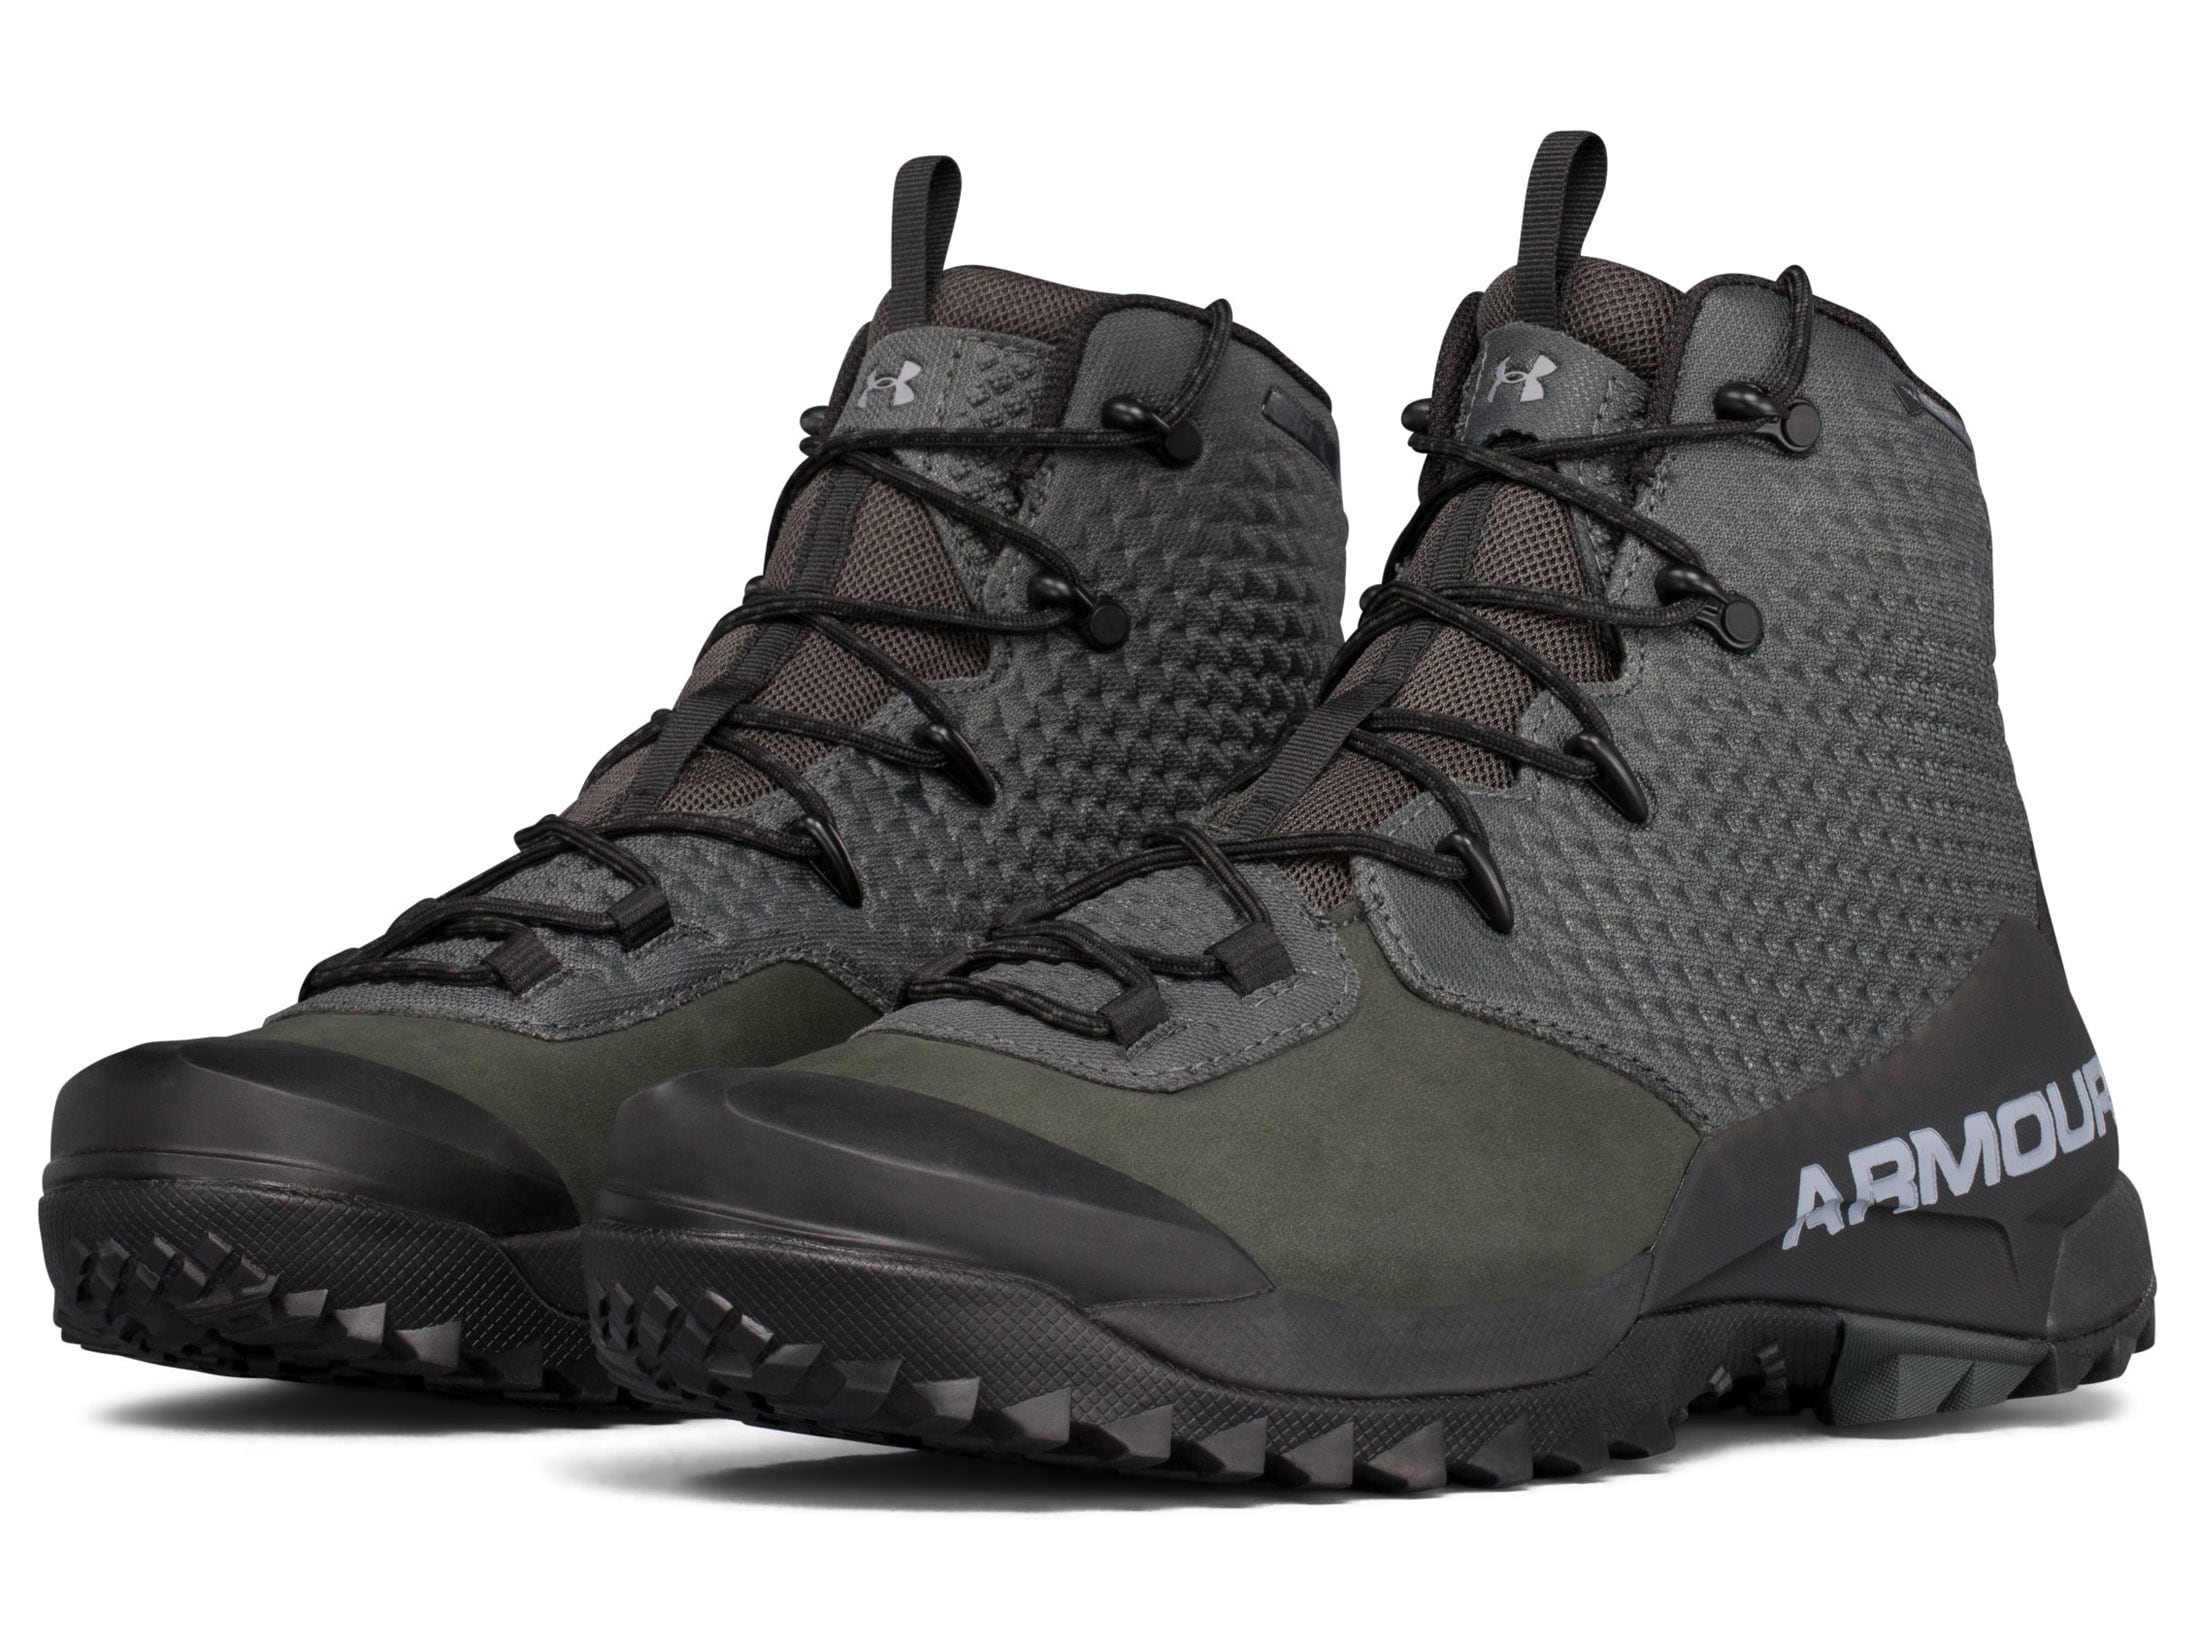 under armour men's ua infil gore-tex hiking boots